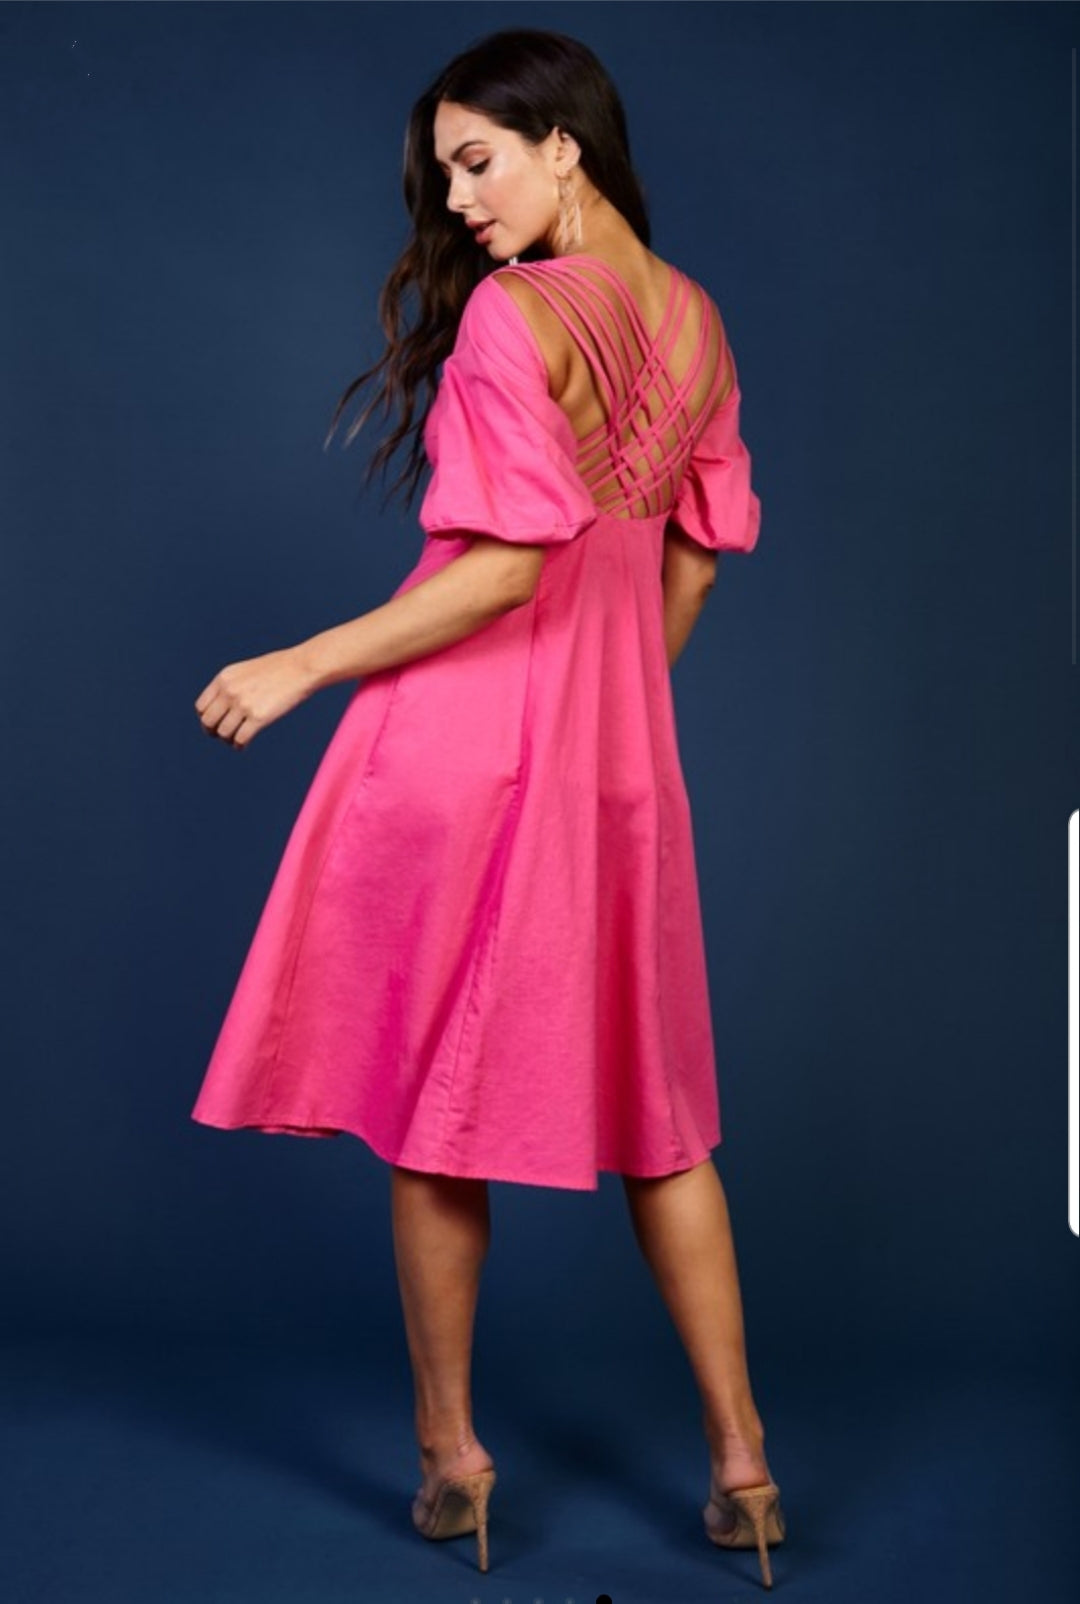 Lady in pink Dress